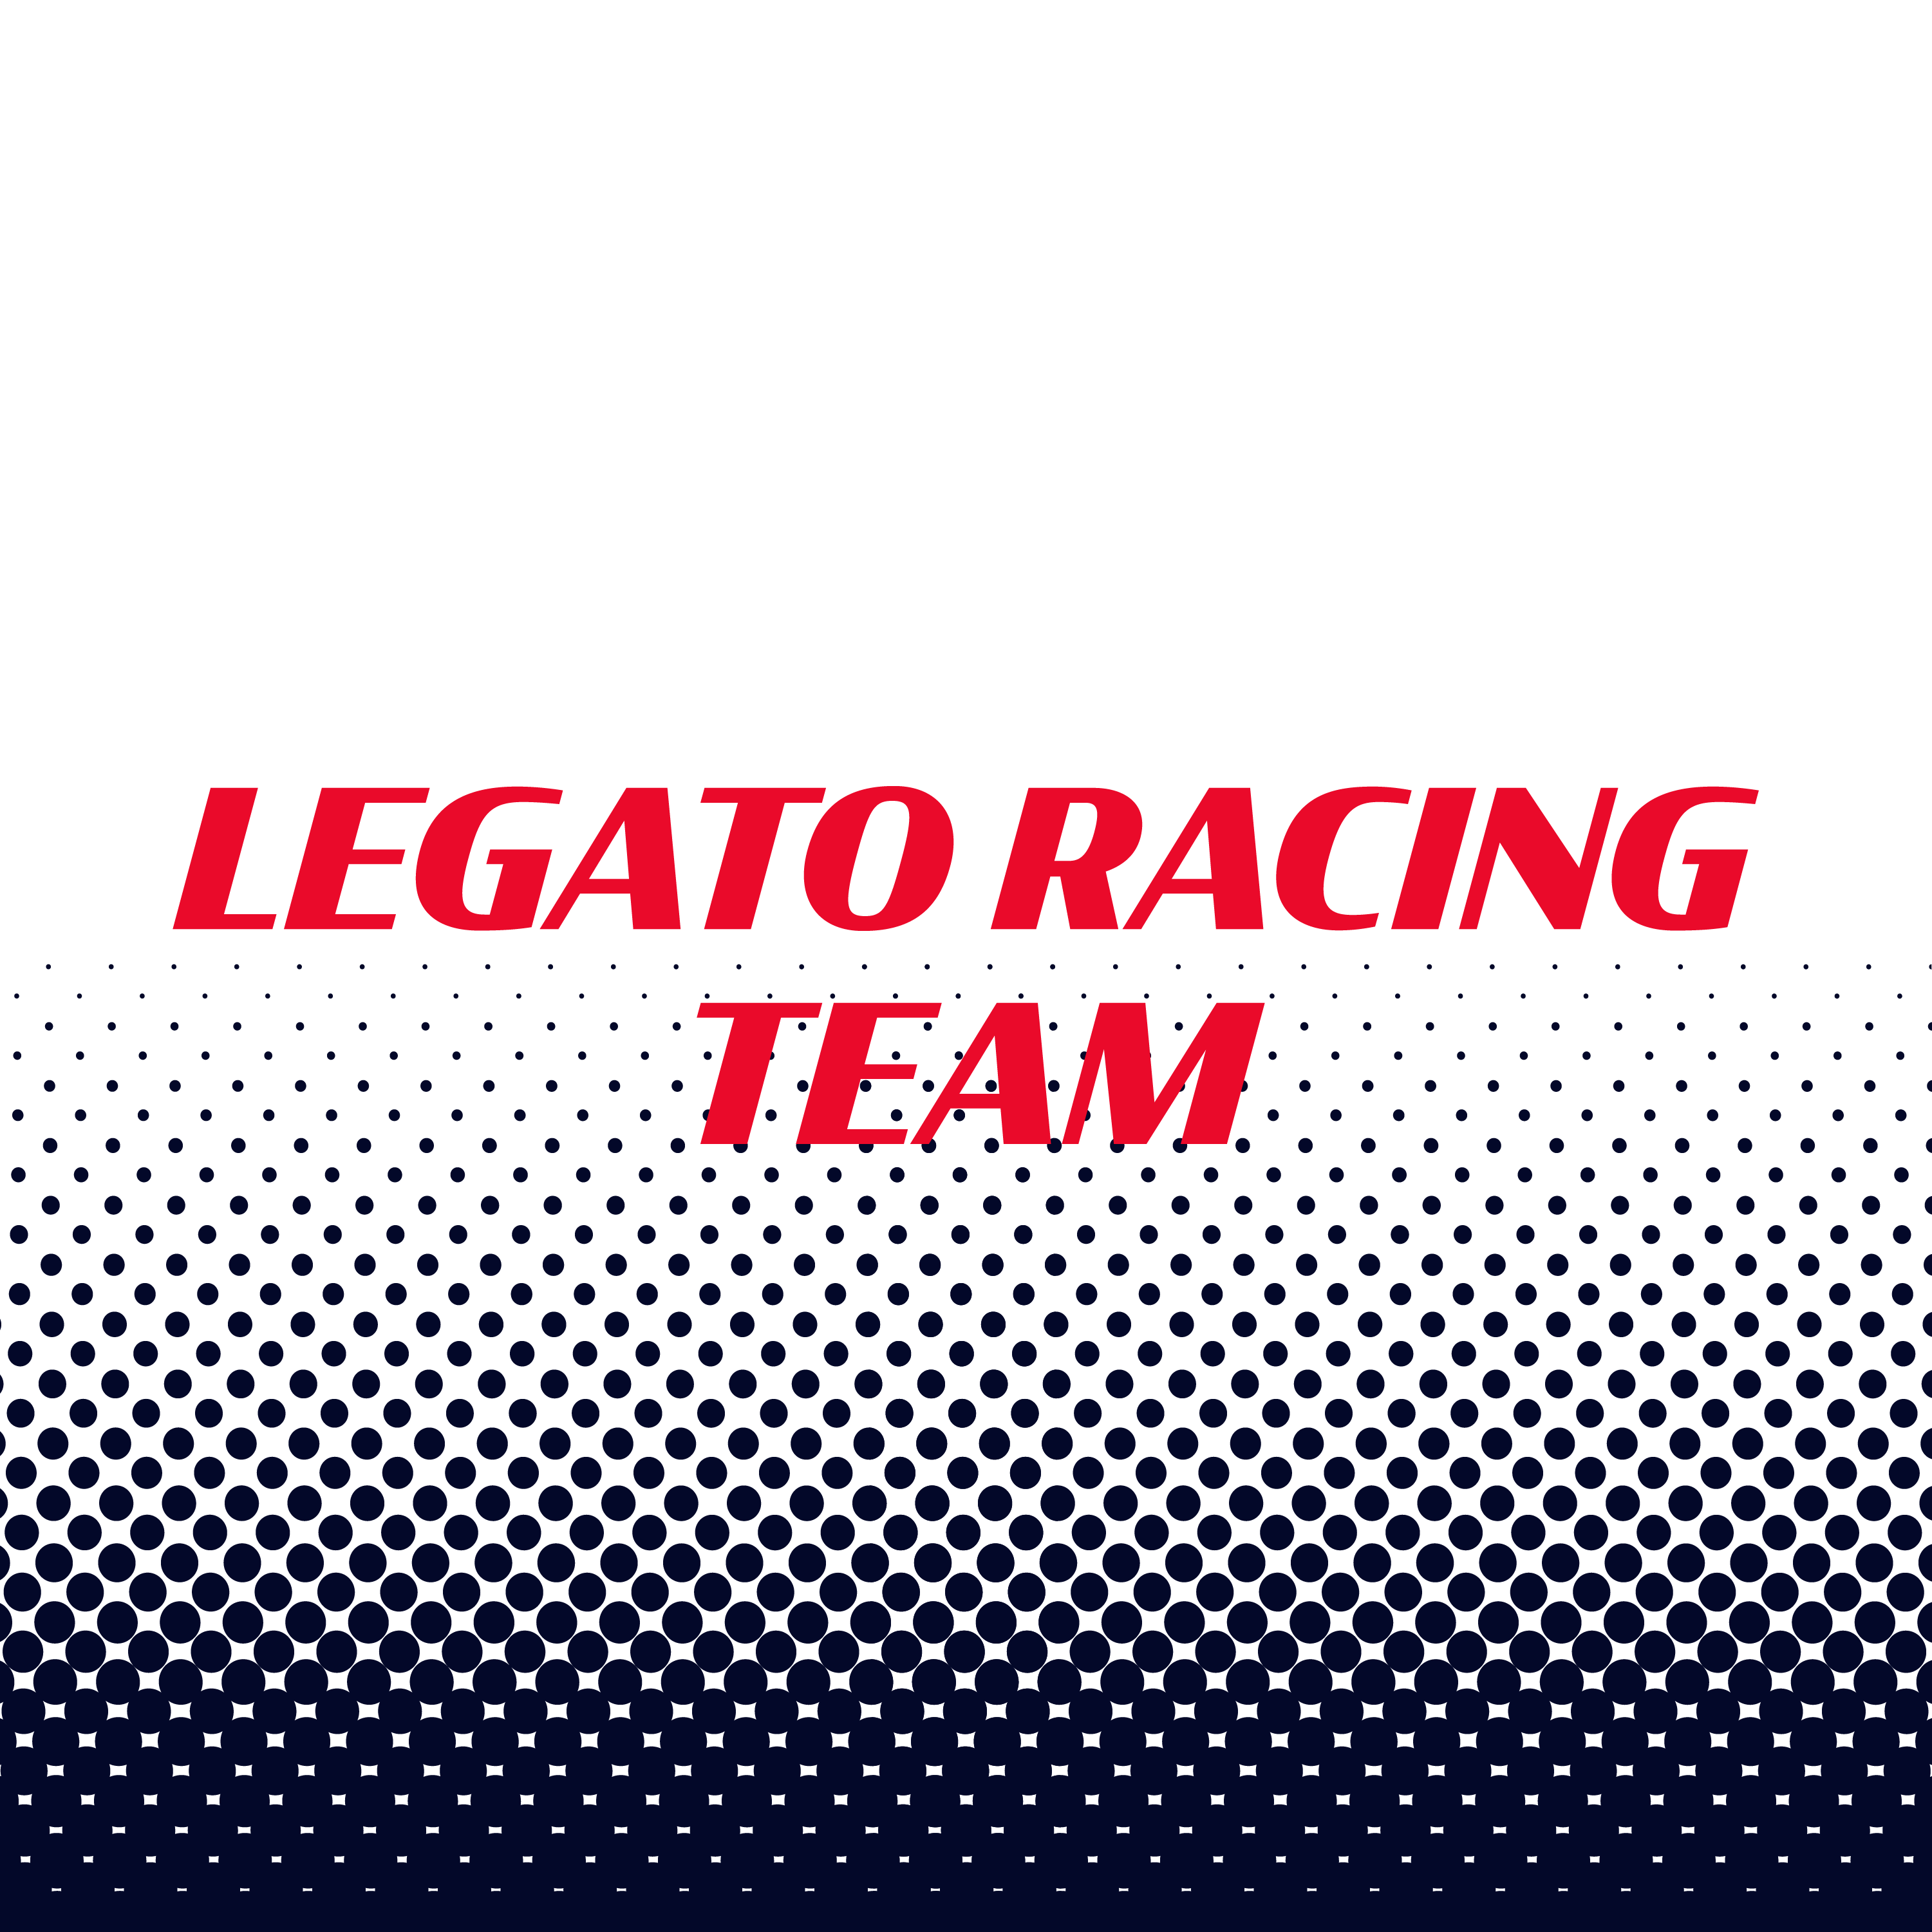 Club Image for LEGATO RACING TEAM